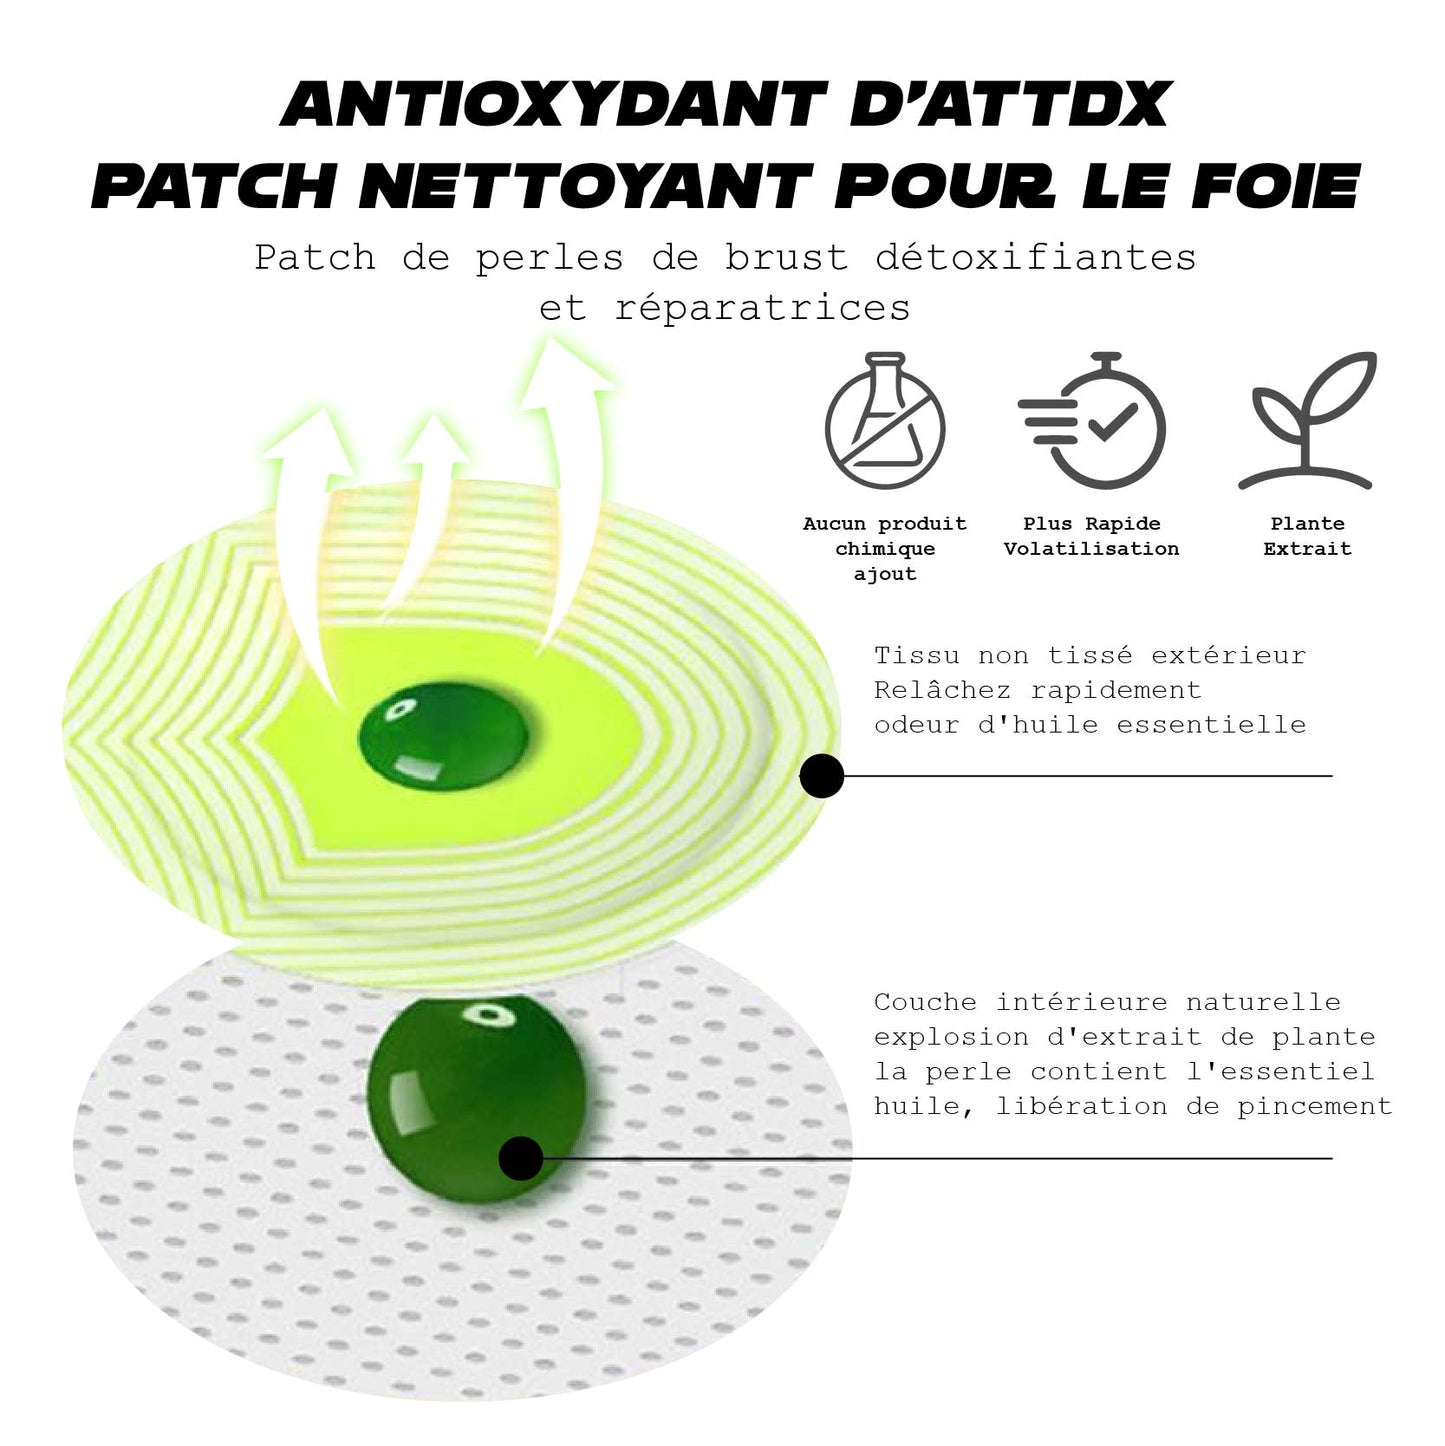 ATTDX Antioxydant Nettoyage du foie Rustine